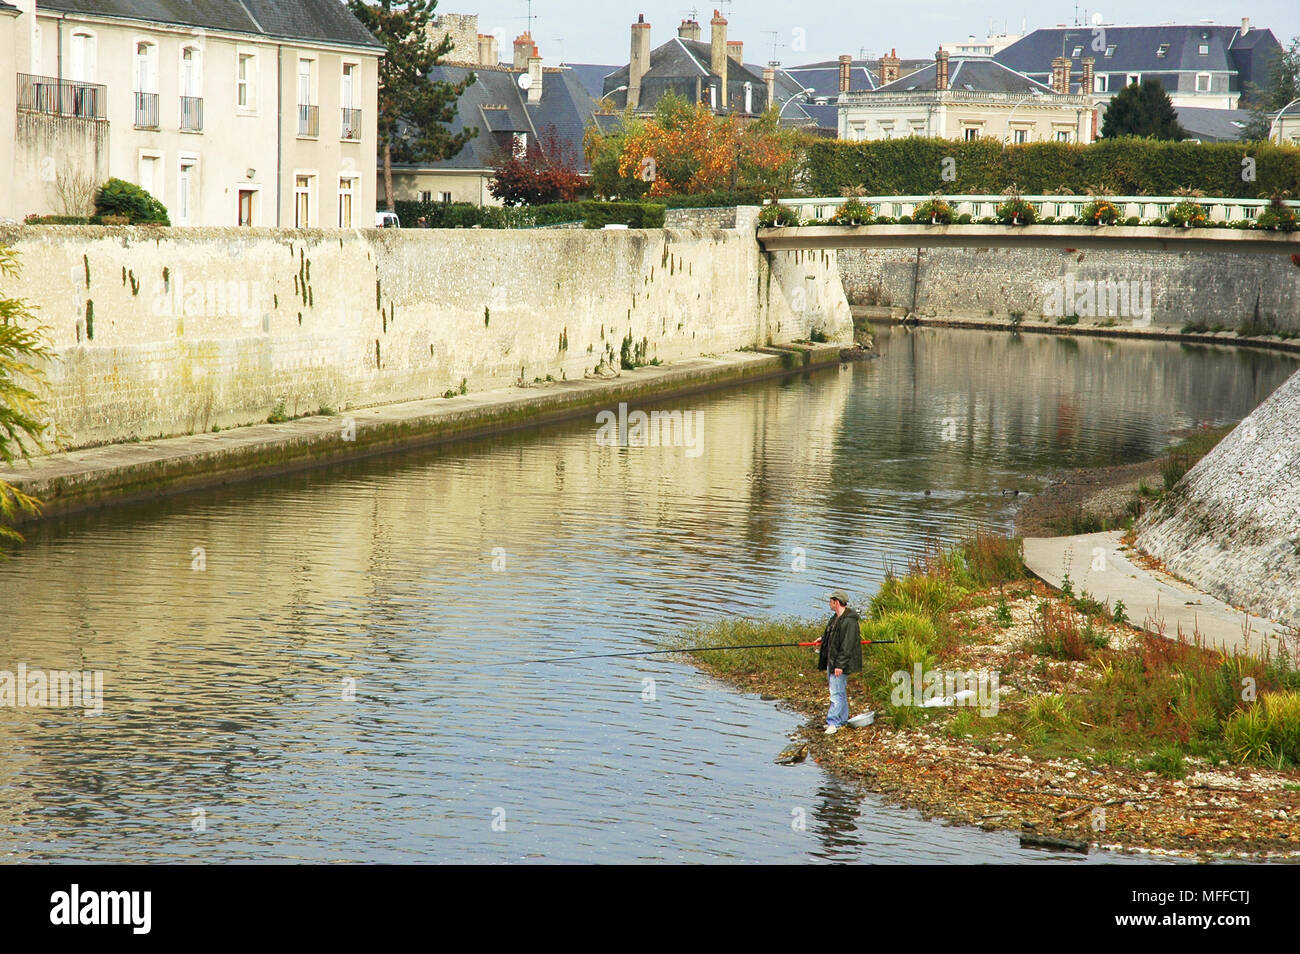 Man fishing in the River Loir, Vendome. Early morning. Stock Photo